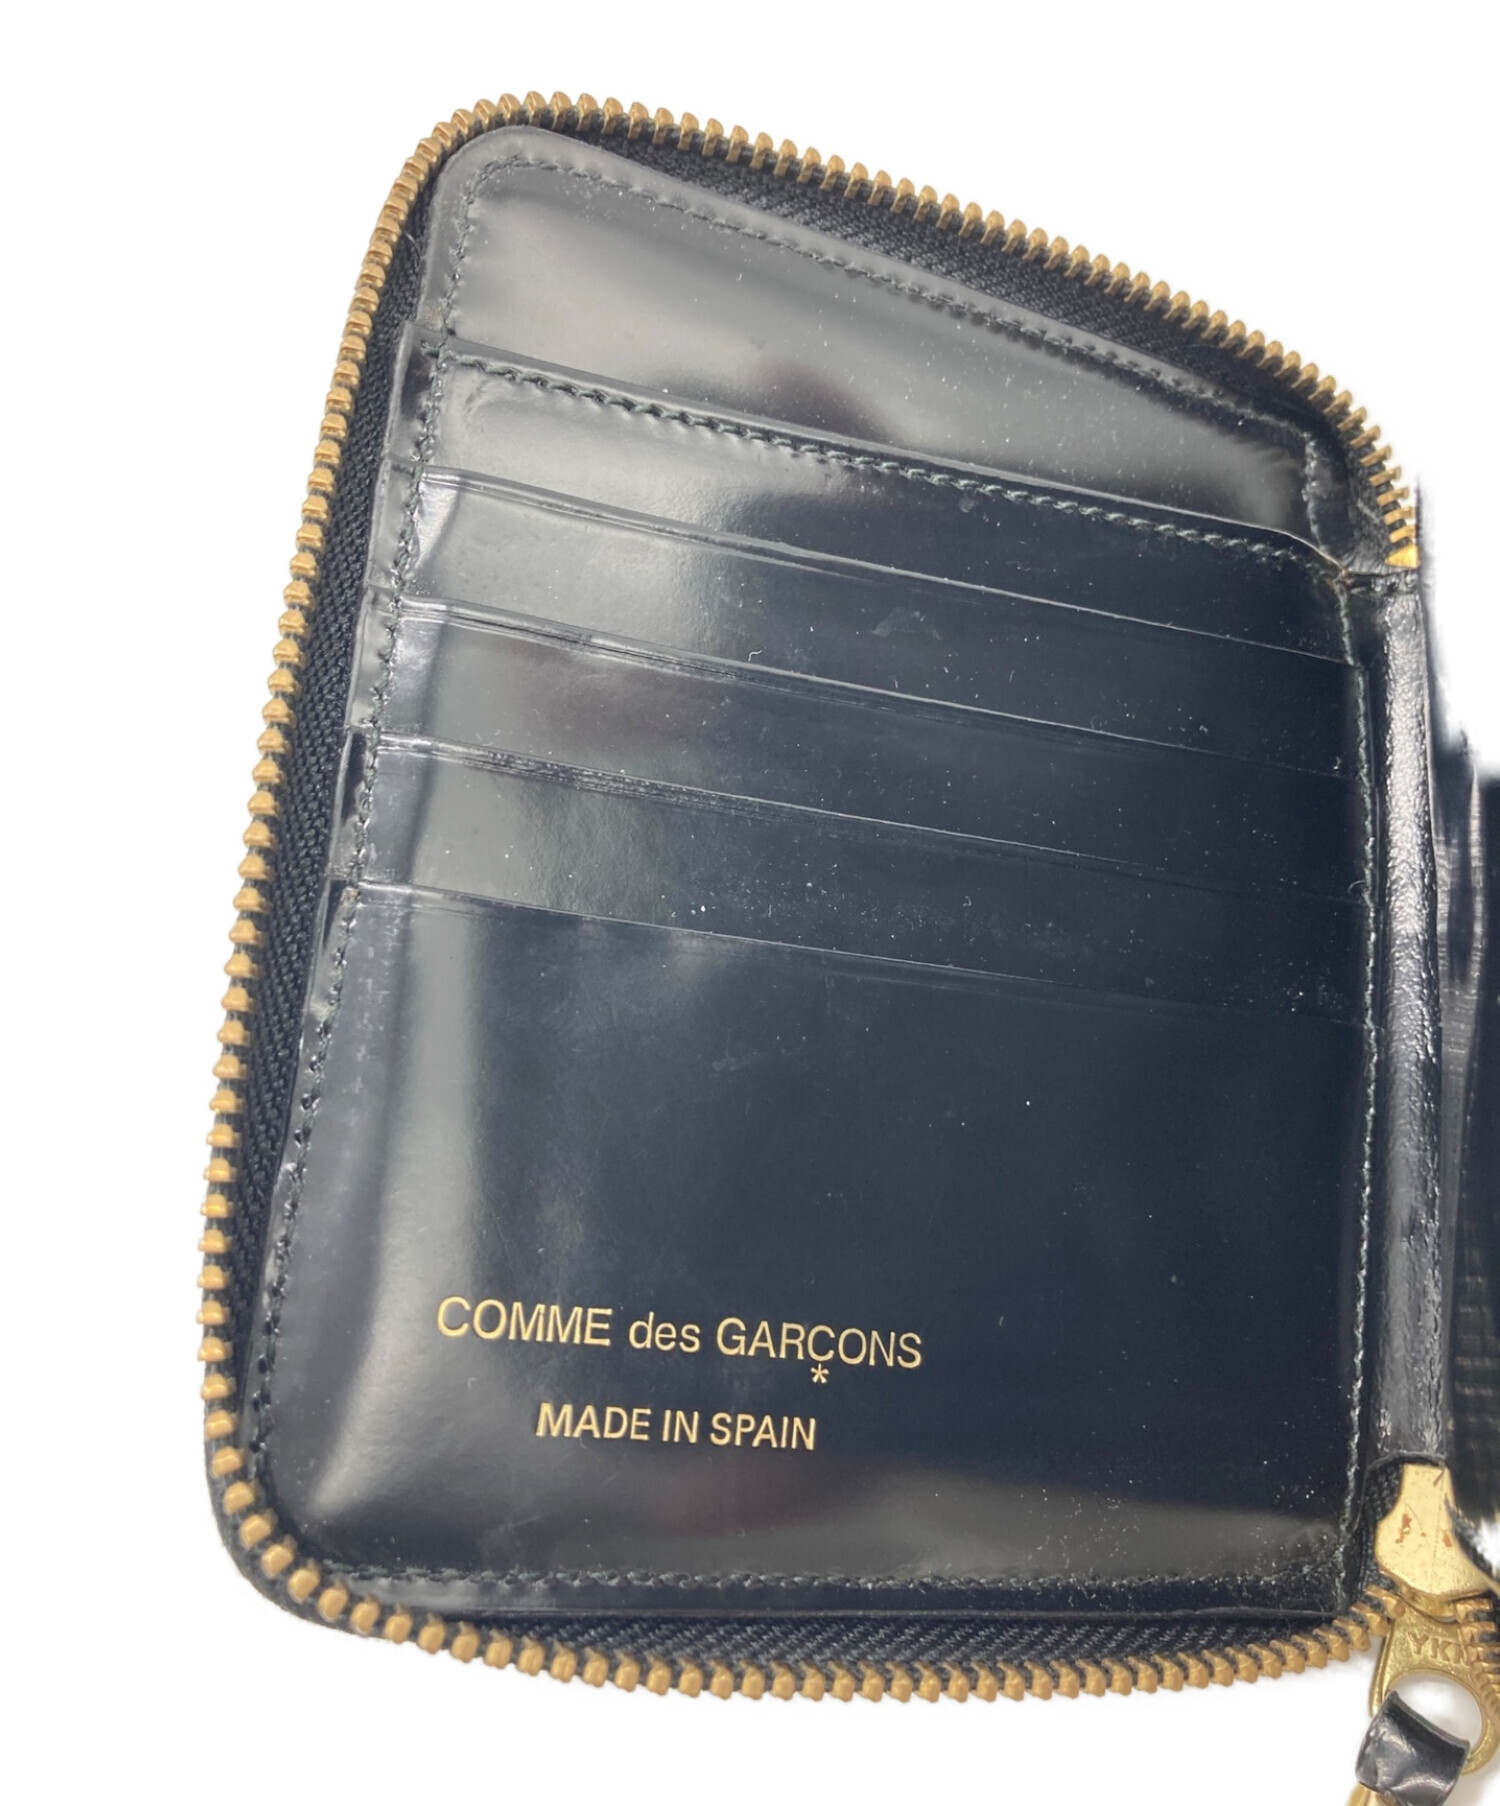 COMME des GARCONS (コムデギャルソン) ラウンドファスナー財布 ブラック